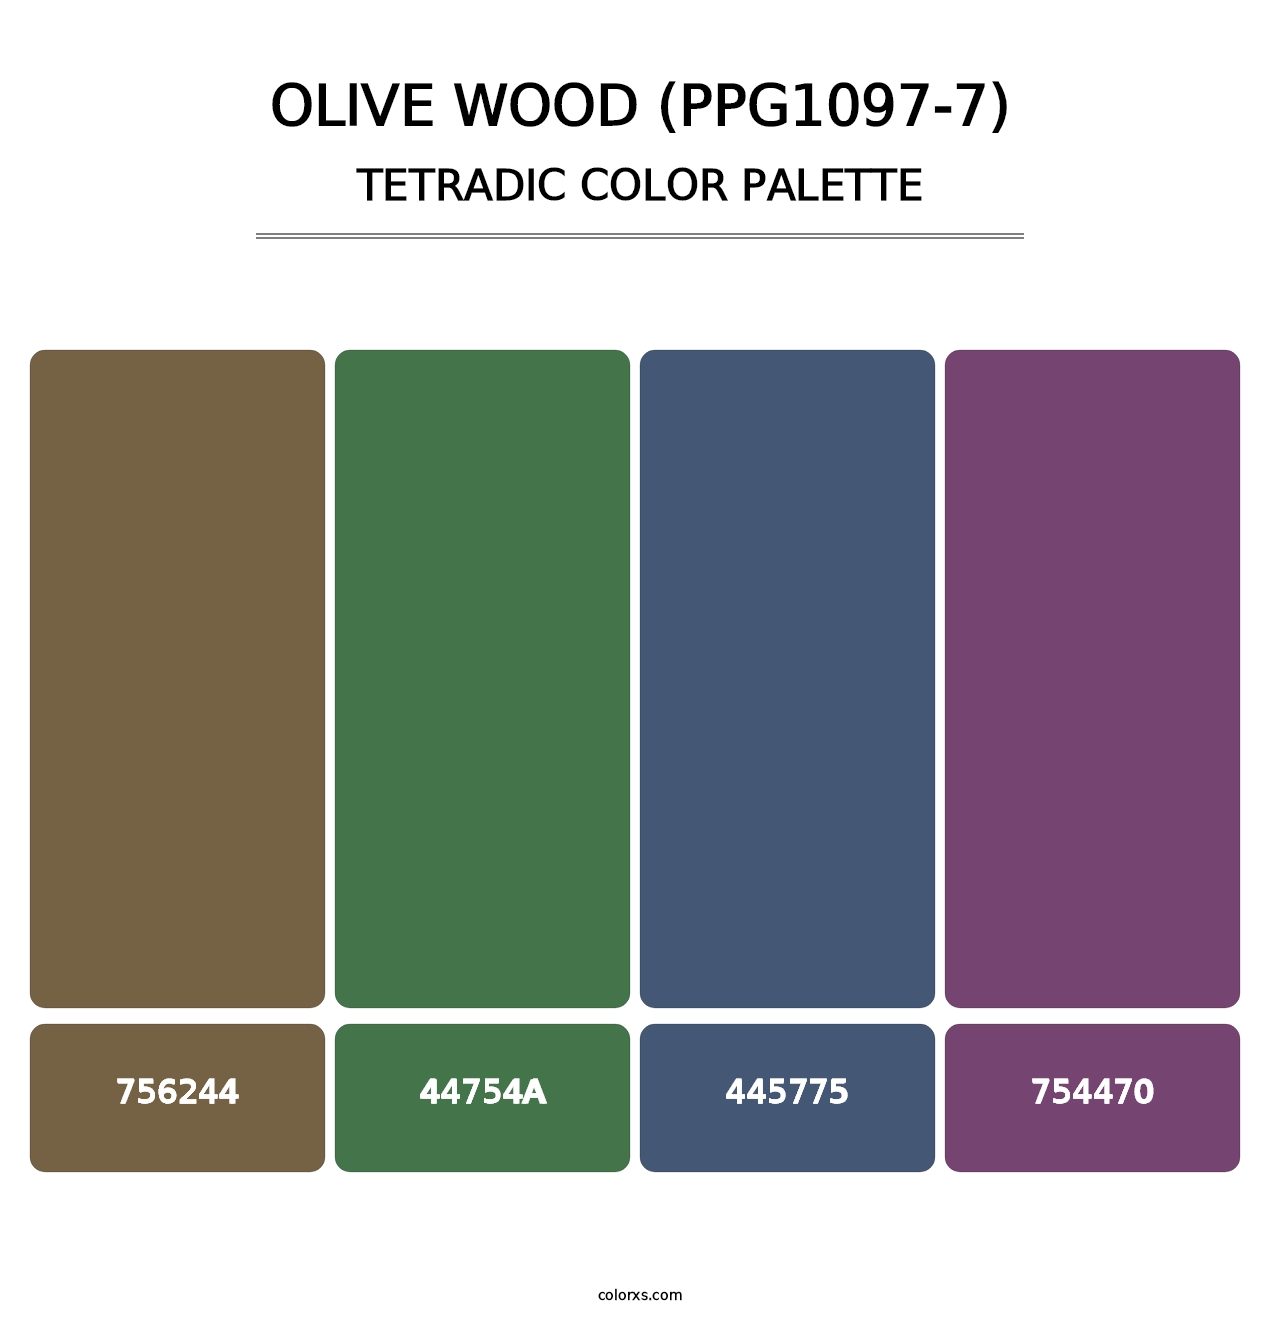 Olive Wood (PPG1097-7) - Tetradic Color Palette